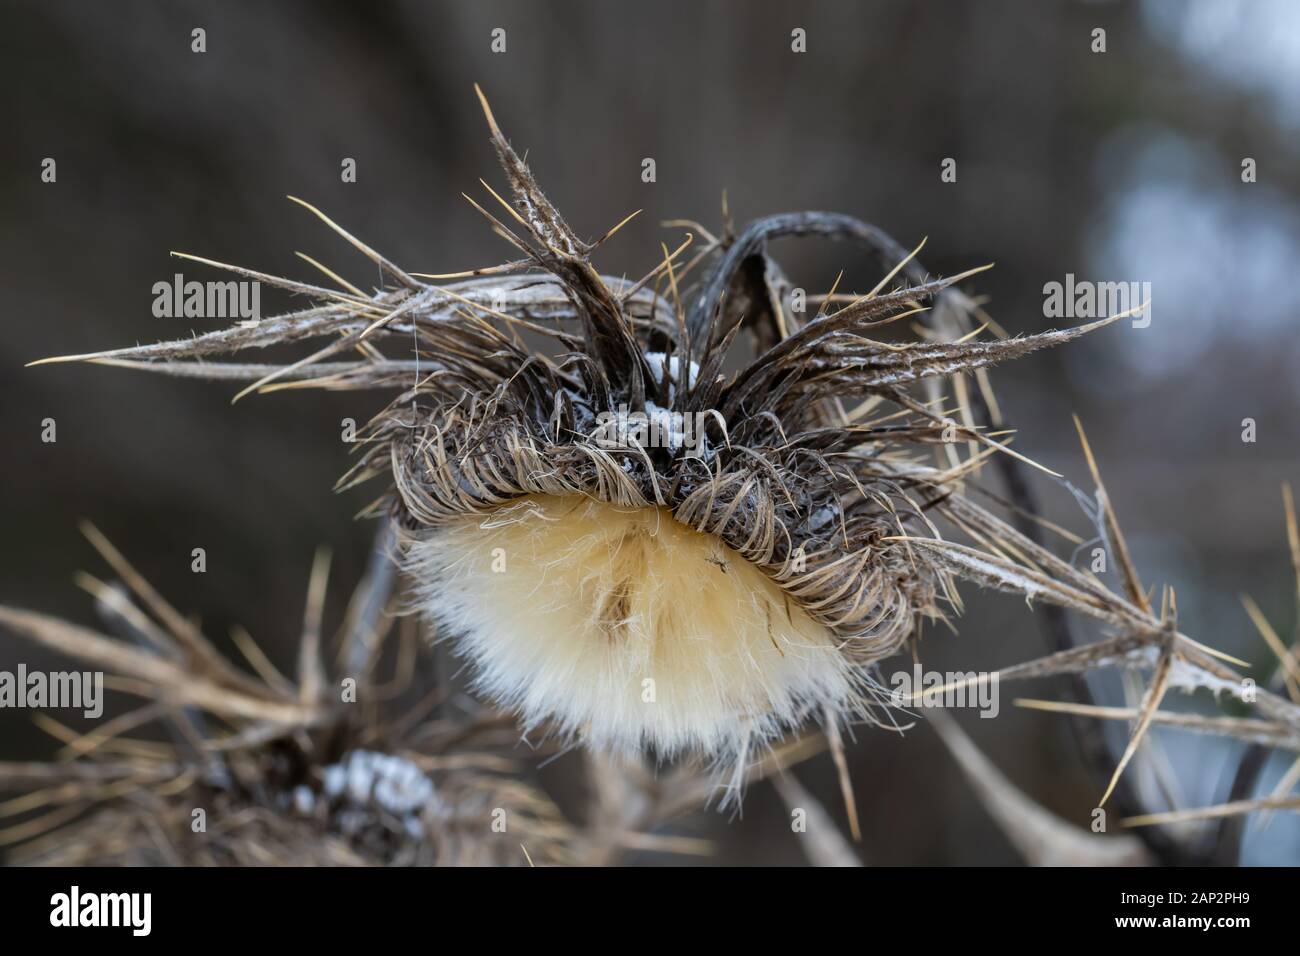 Corymbose Carline-thistle (Carlina corymbosa) at winter. Stock Photo